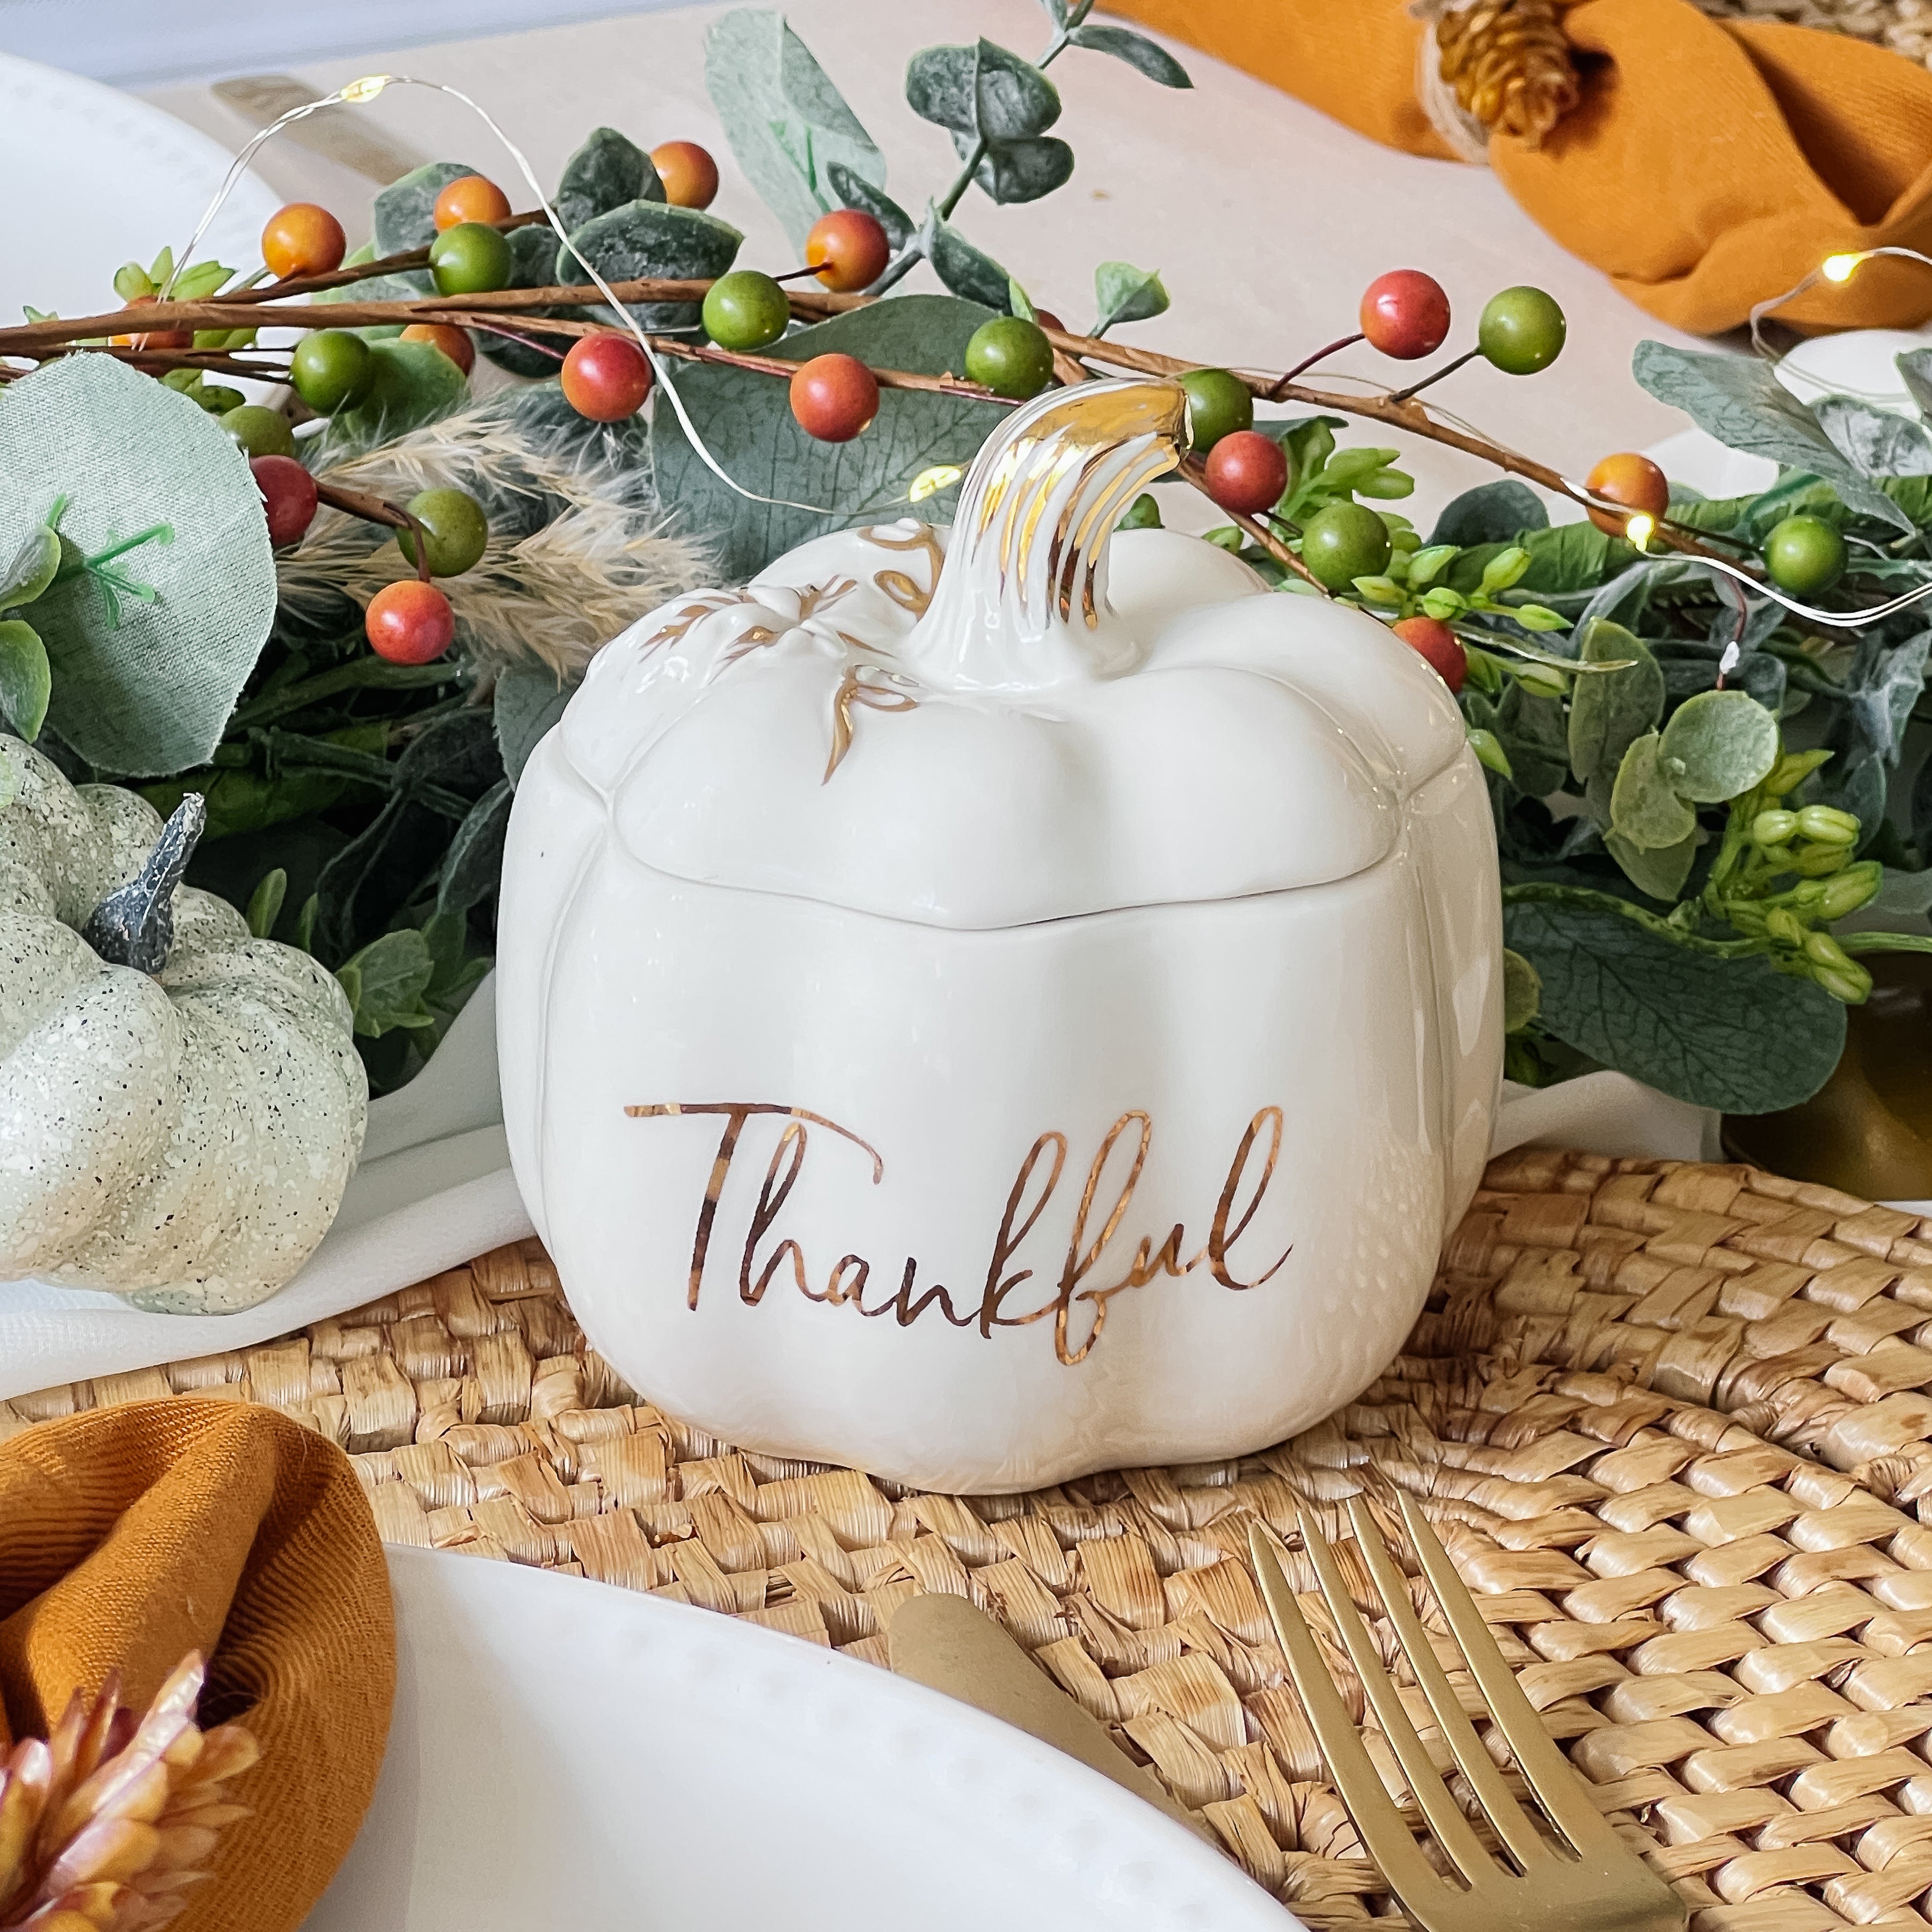 Thankful White Pumpkin Decorative Bowl